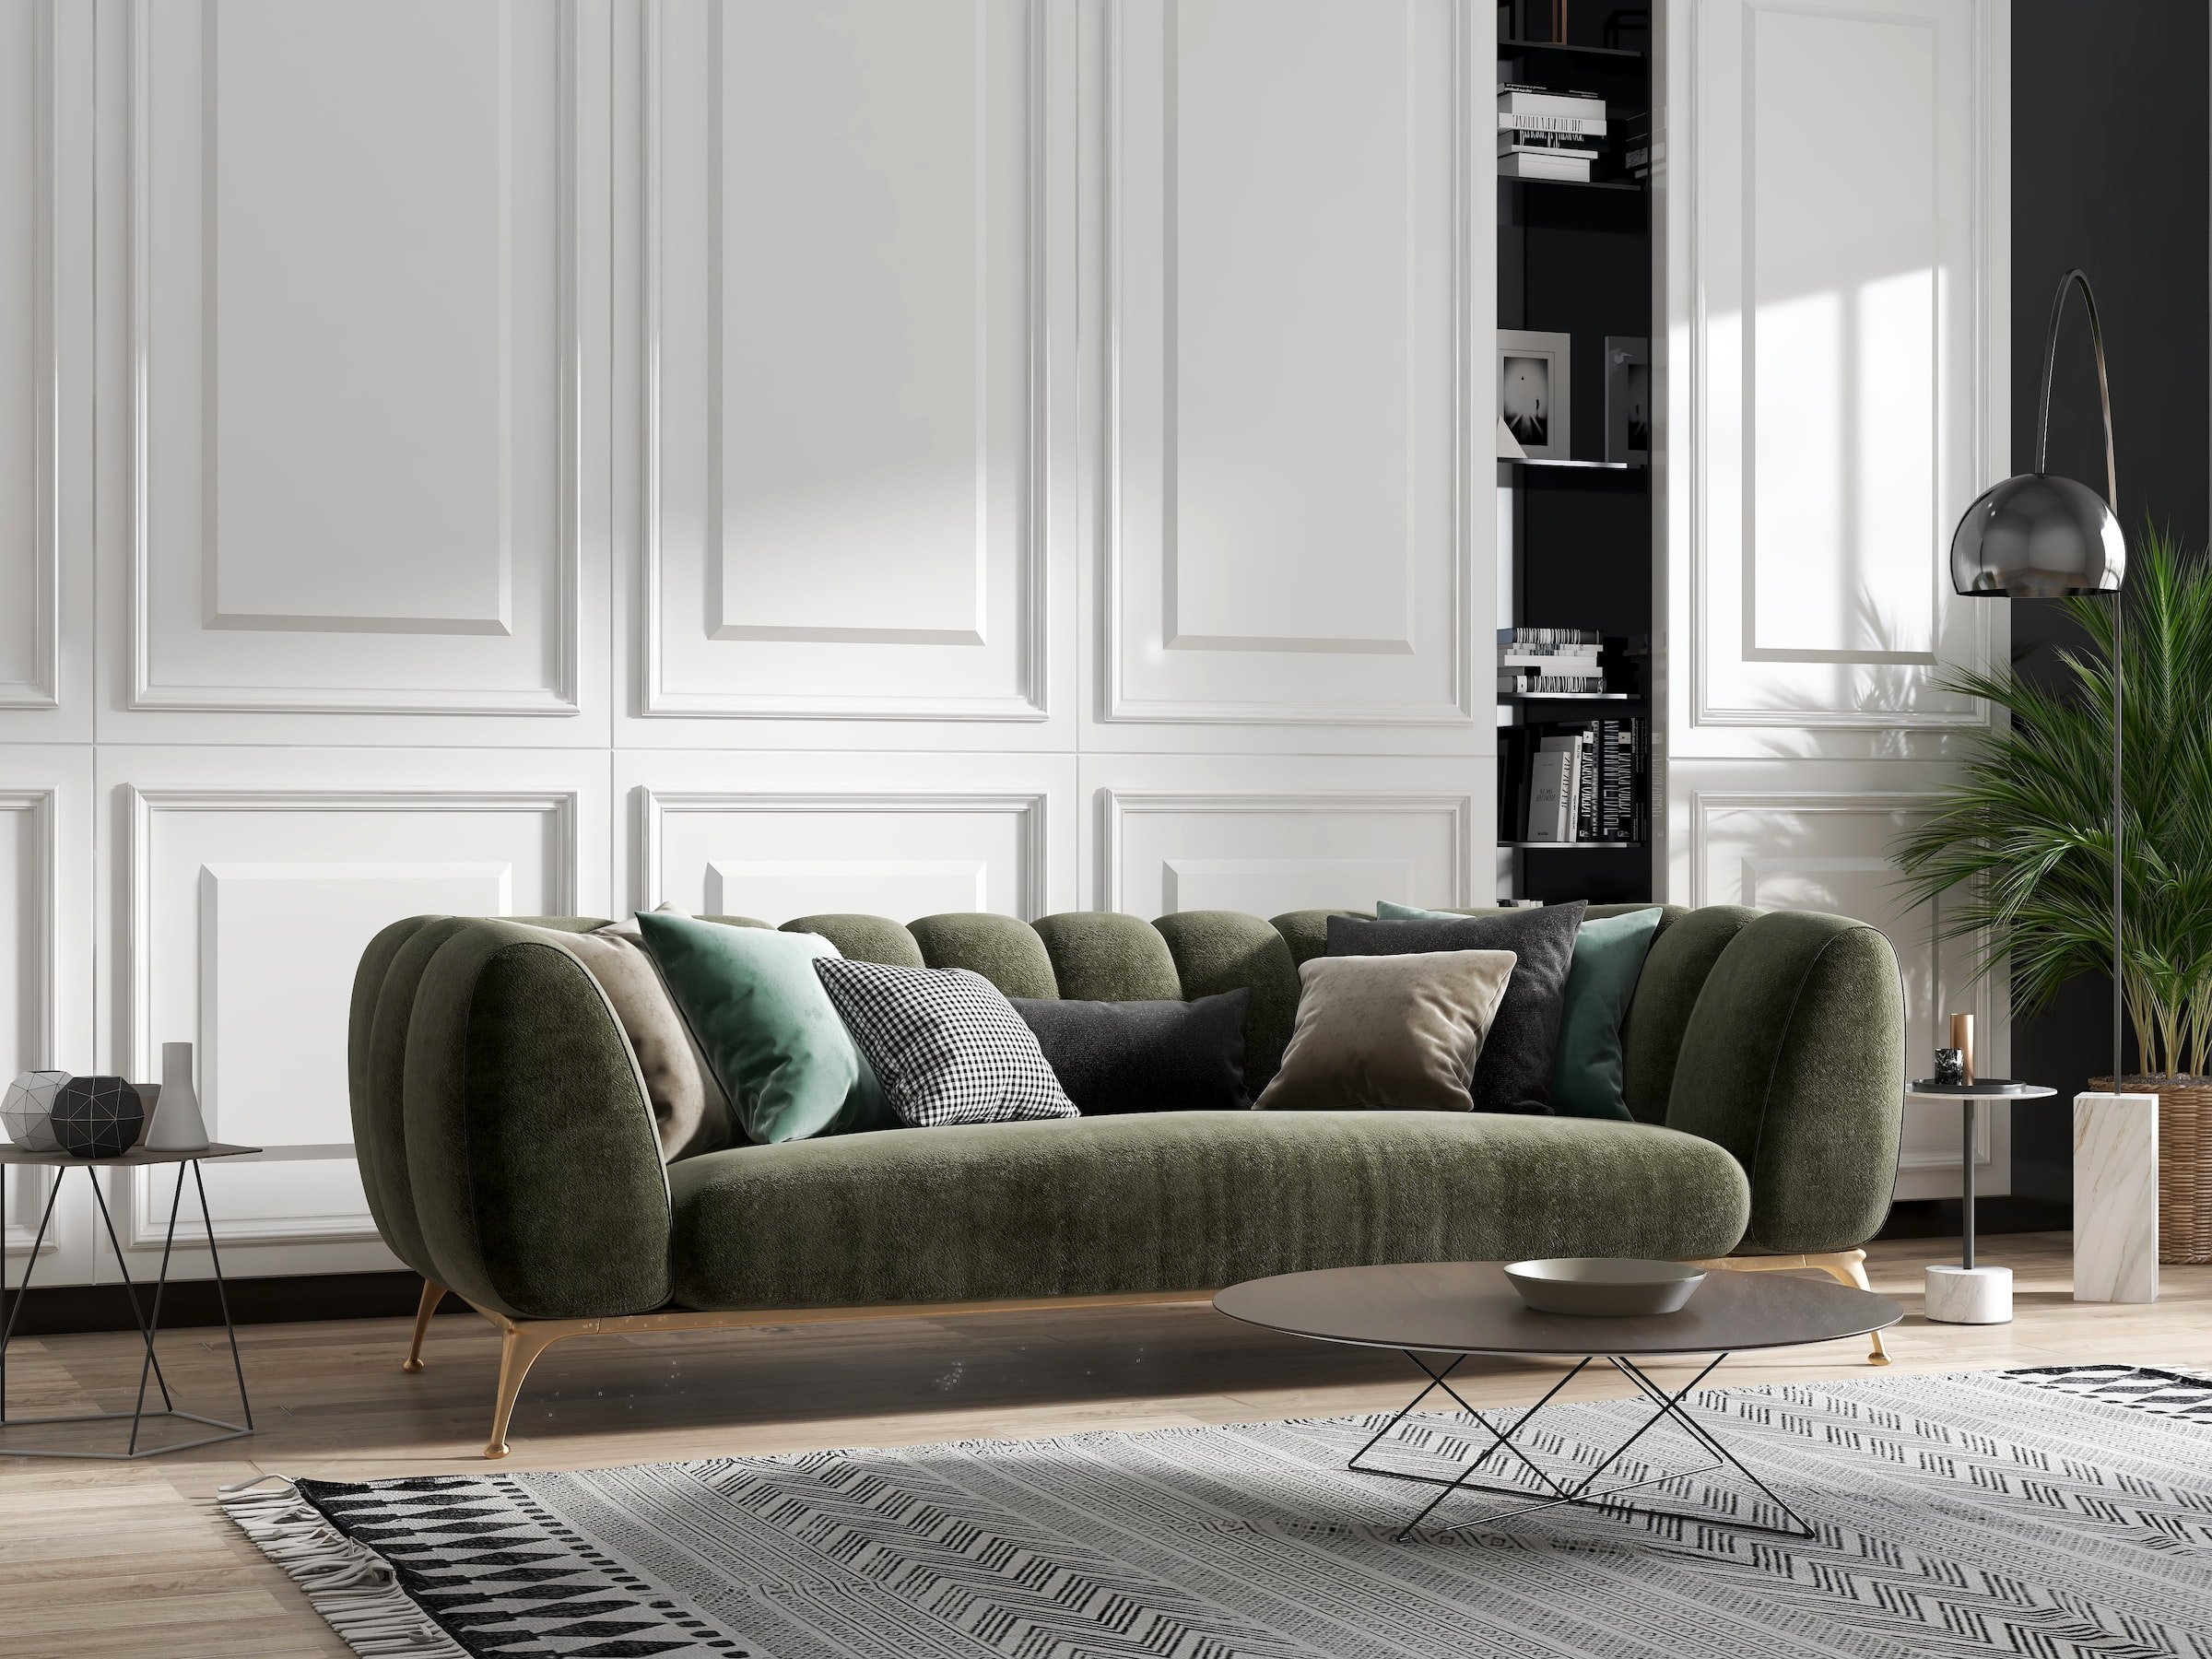 Bright living room with vinyl flooring